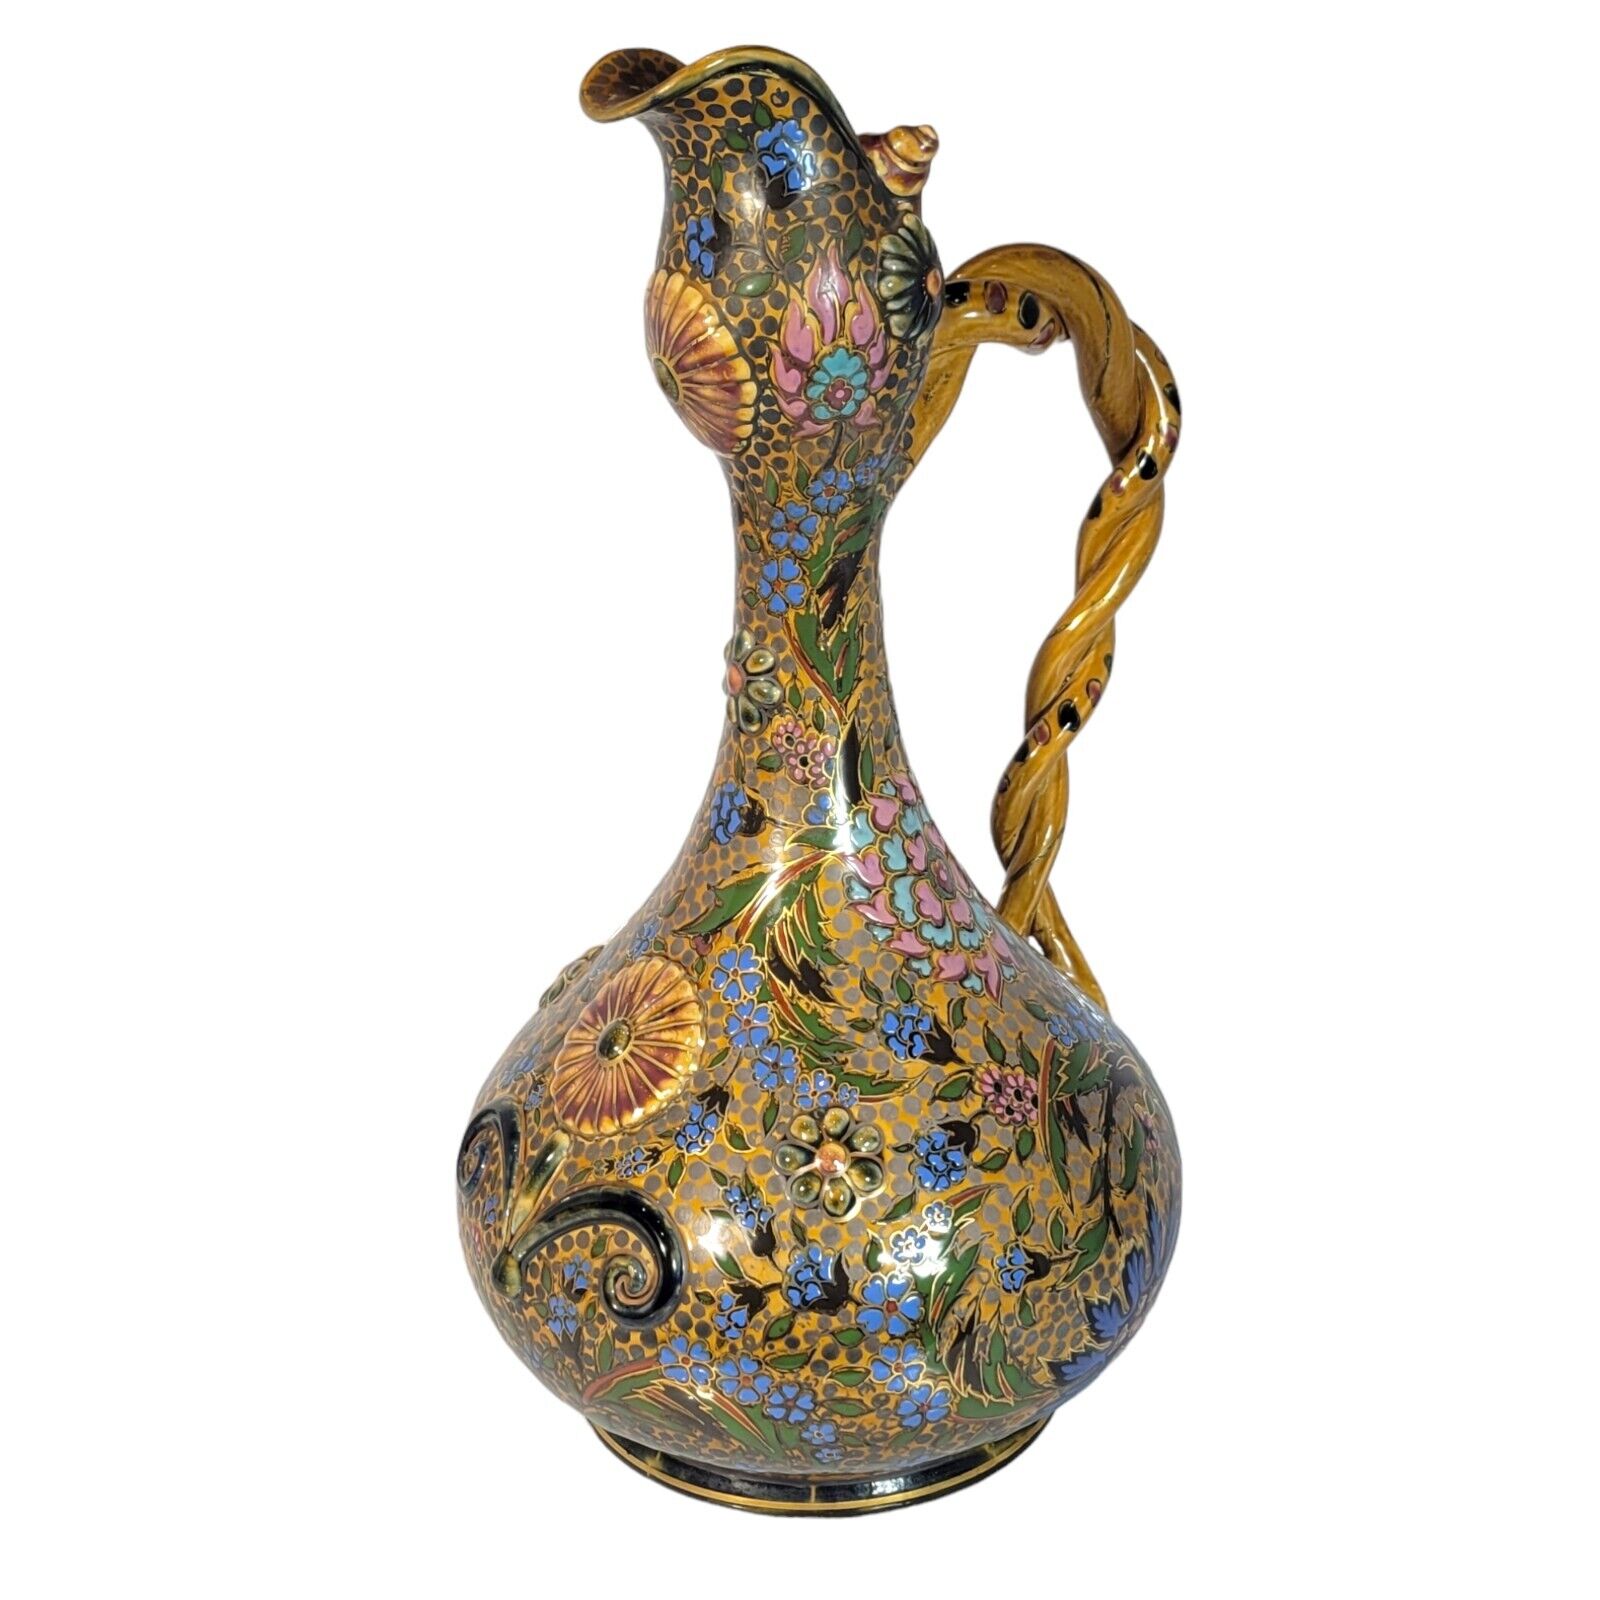 Zsolnay Factory Porcelain Tall Vase, Pécs, Hungary, ca. 1873-1882